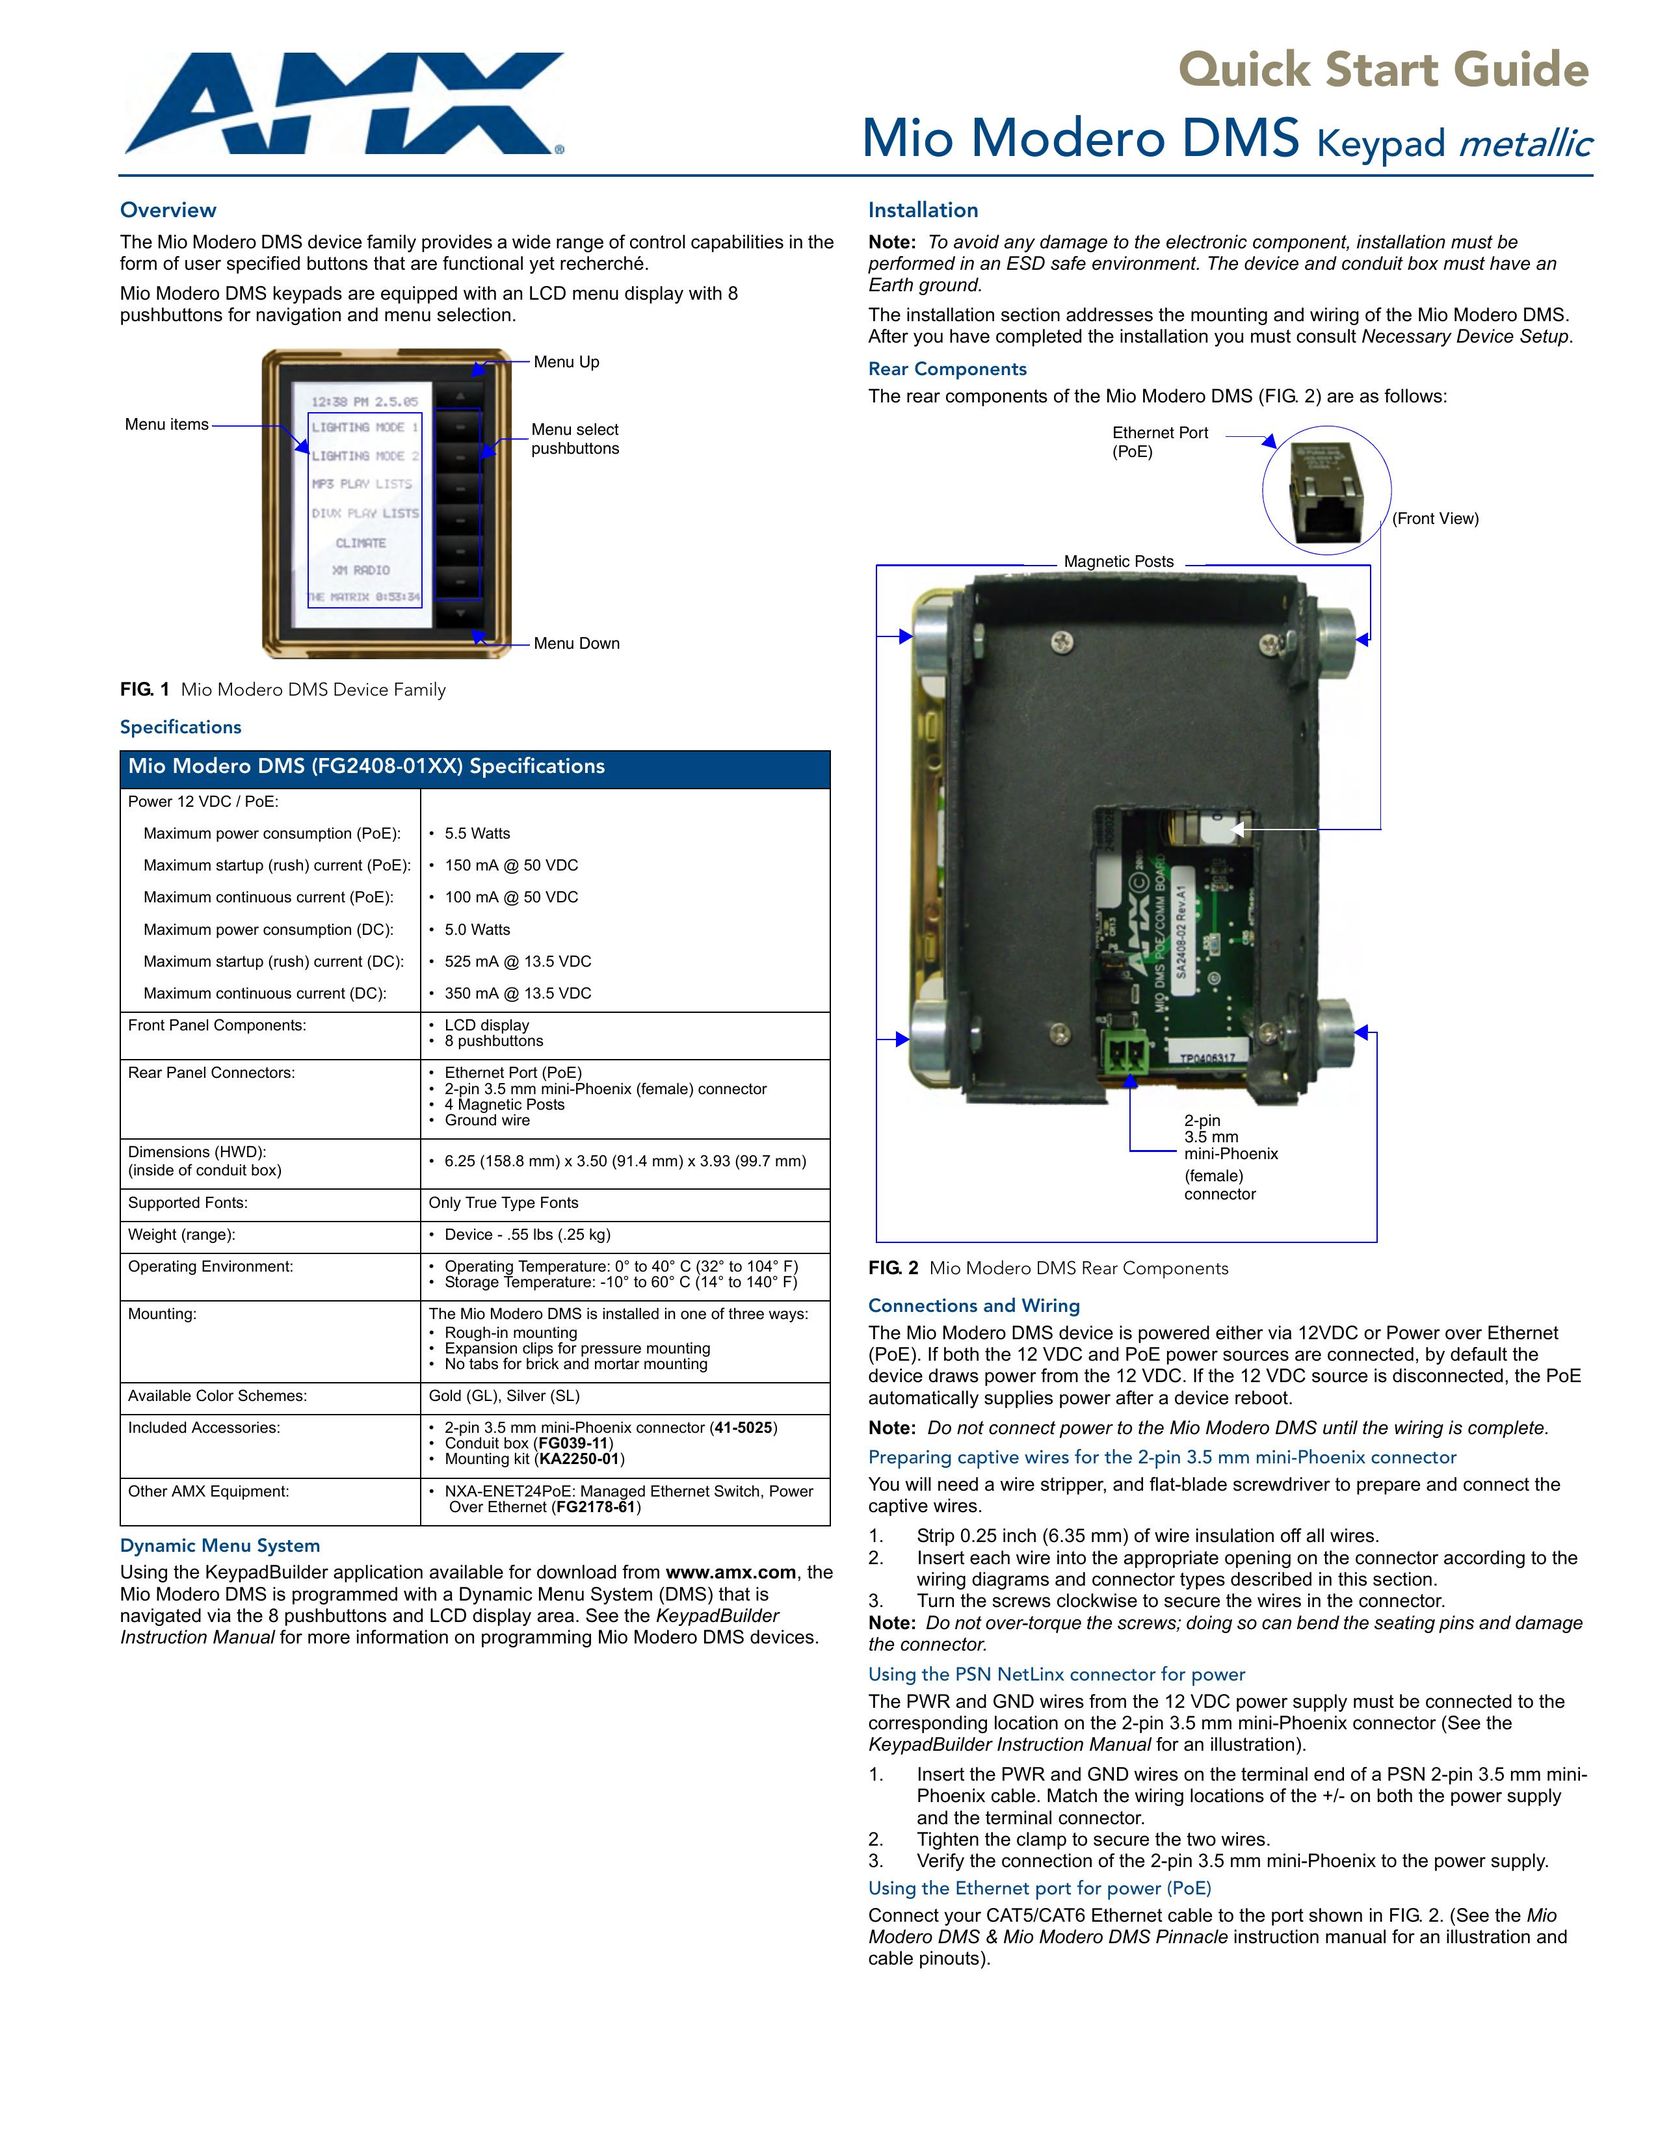 AMX DMS (FG2408-01XX) Universal Remote User Manual